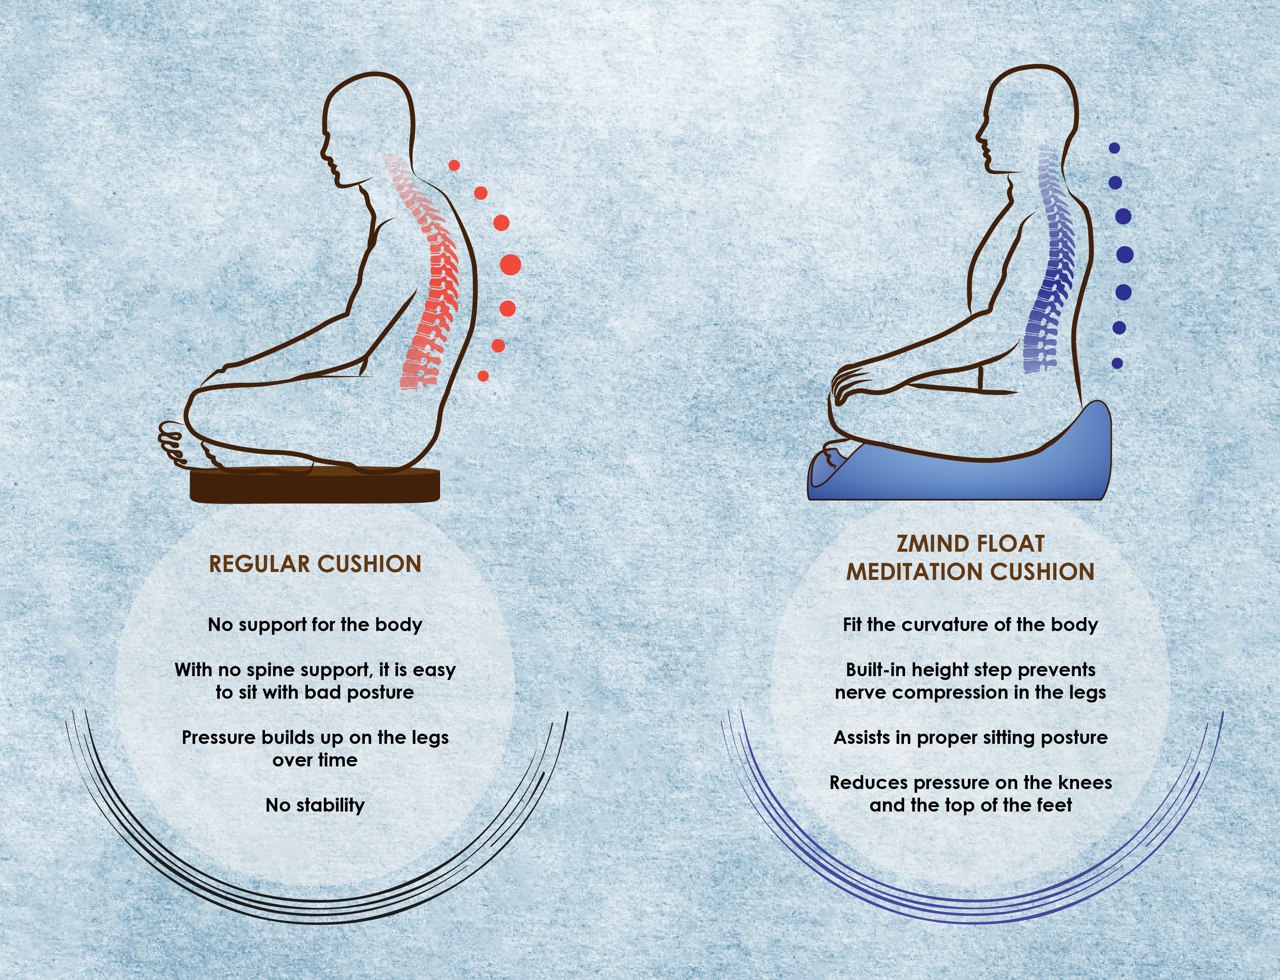 https://www.yankodesign.com/images/design_news/2022/07/float-ergonomic-cushion-makes-meditation-a-more-uplifting-experience/float_cushion_ergonomically_designed_to_find_proper_posture_for_meditation_05.jpg